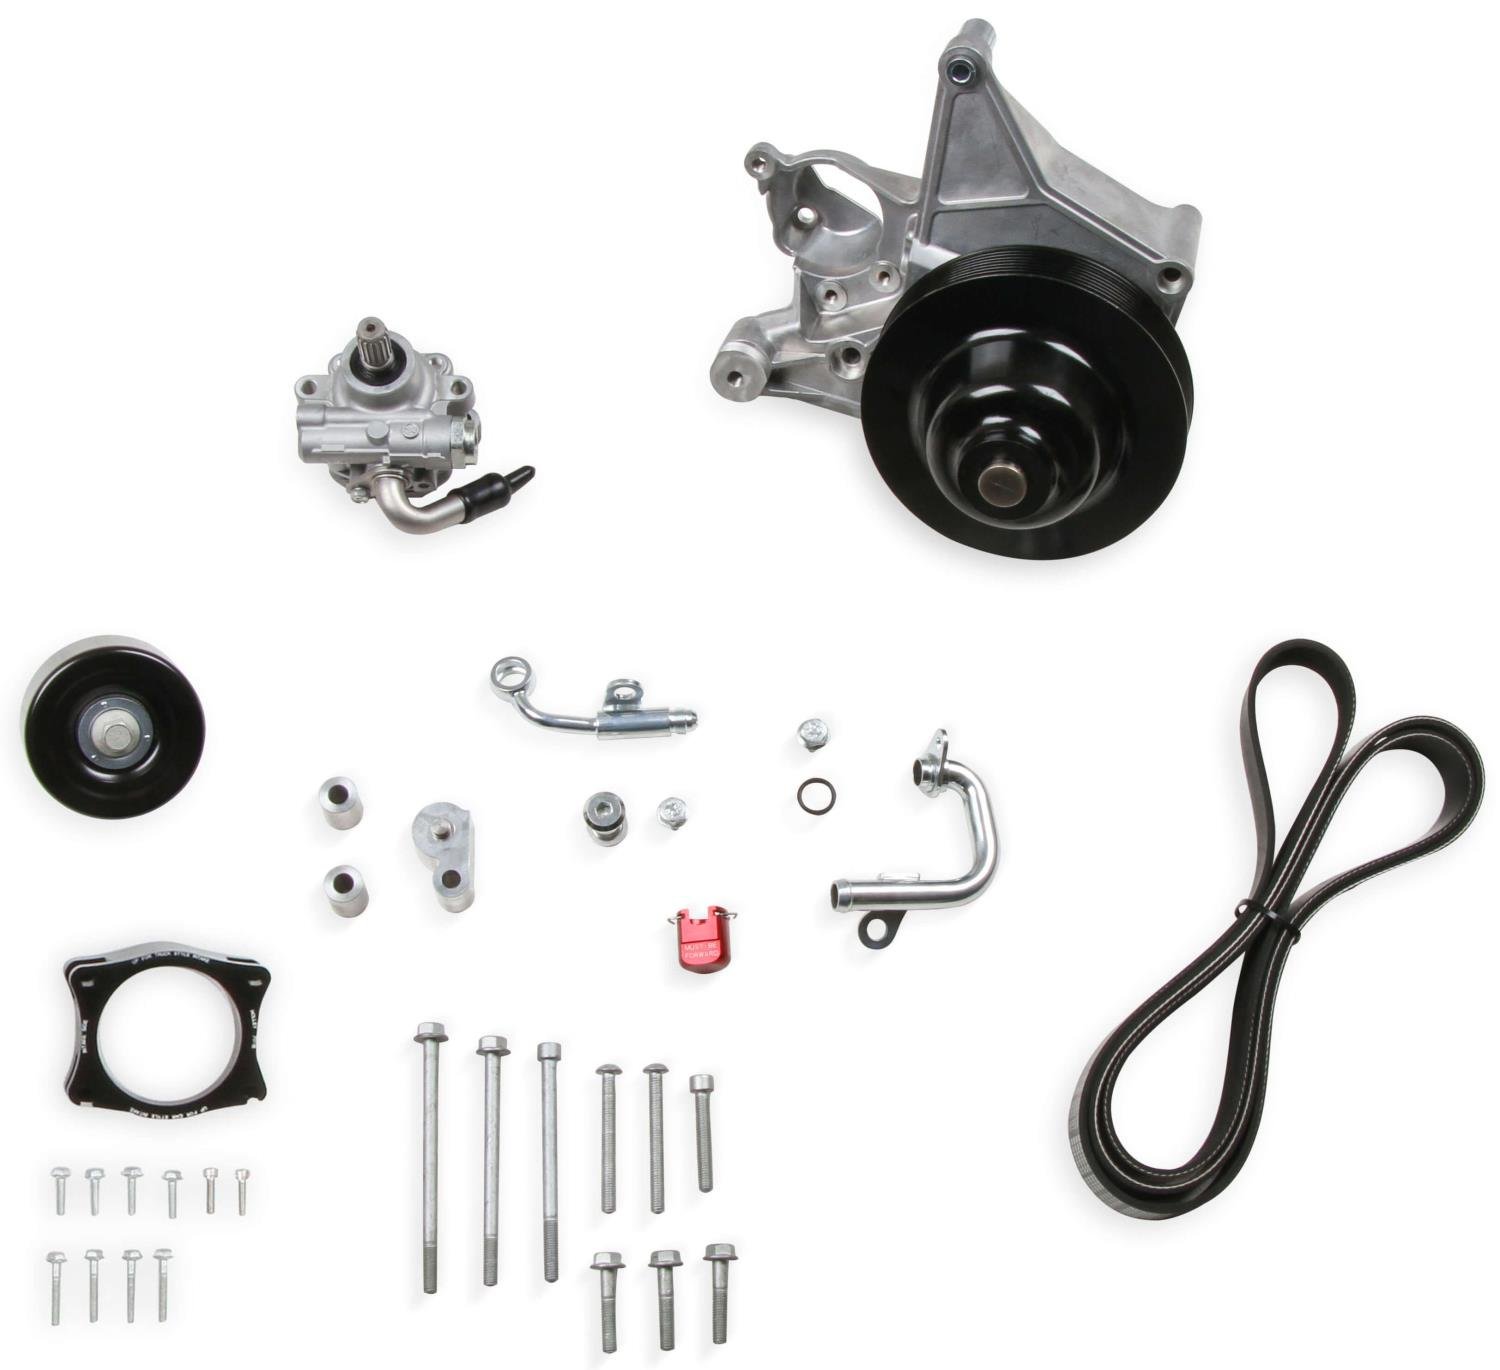 Retro-Fit Hydraulic Power Steering Kit for GM Gen V LT4